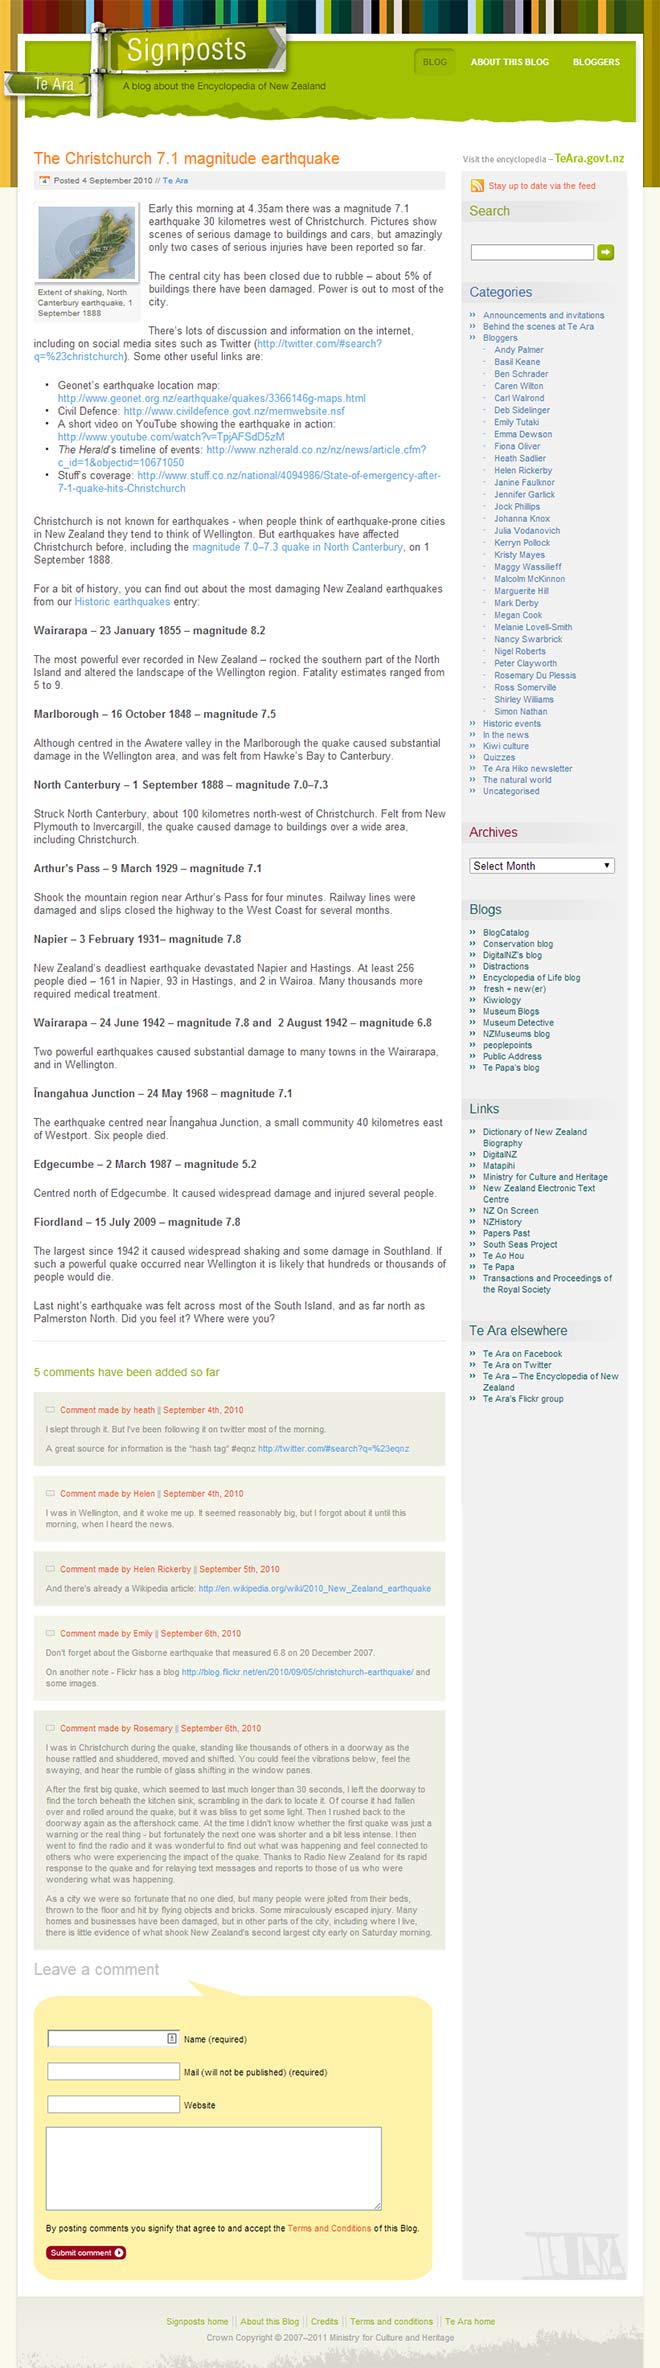 Blog post, 2010 Christchurch earthquake